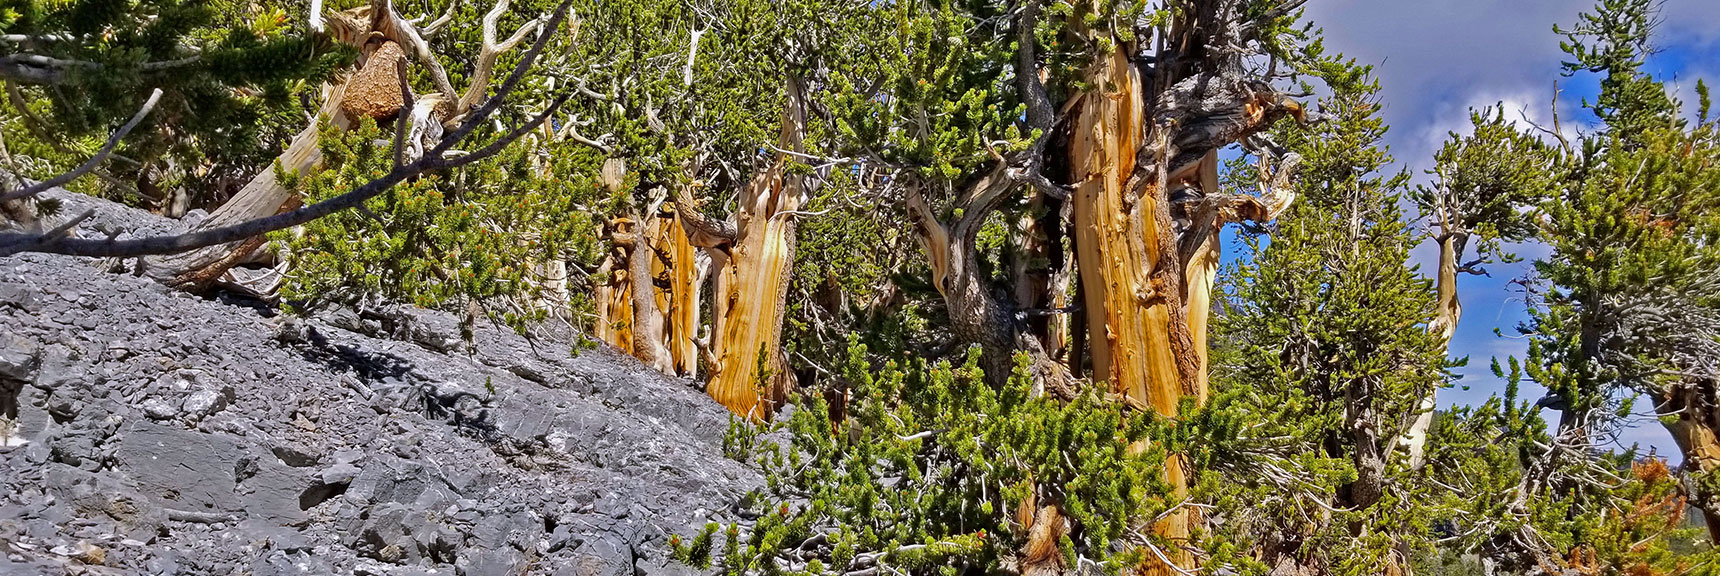 More Ancient Bristlecone Pine Sculptures (est. 2000 yrs old) Arising from the Limestone Slab. | Grand Circuit Loop Cougar Ridge Trail, Mummy Mountain Knees | Mummy Mountain Toe | Mummy Springs | Raintree | Fletcher Peak | Mt Charleston Wilderness | Spring Mountains, Nevada